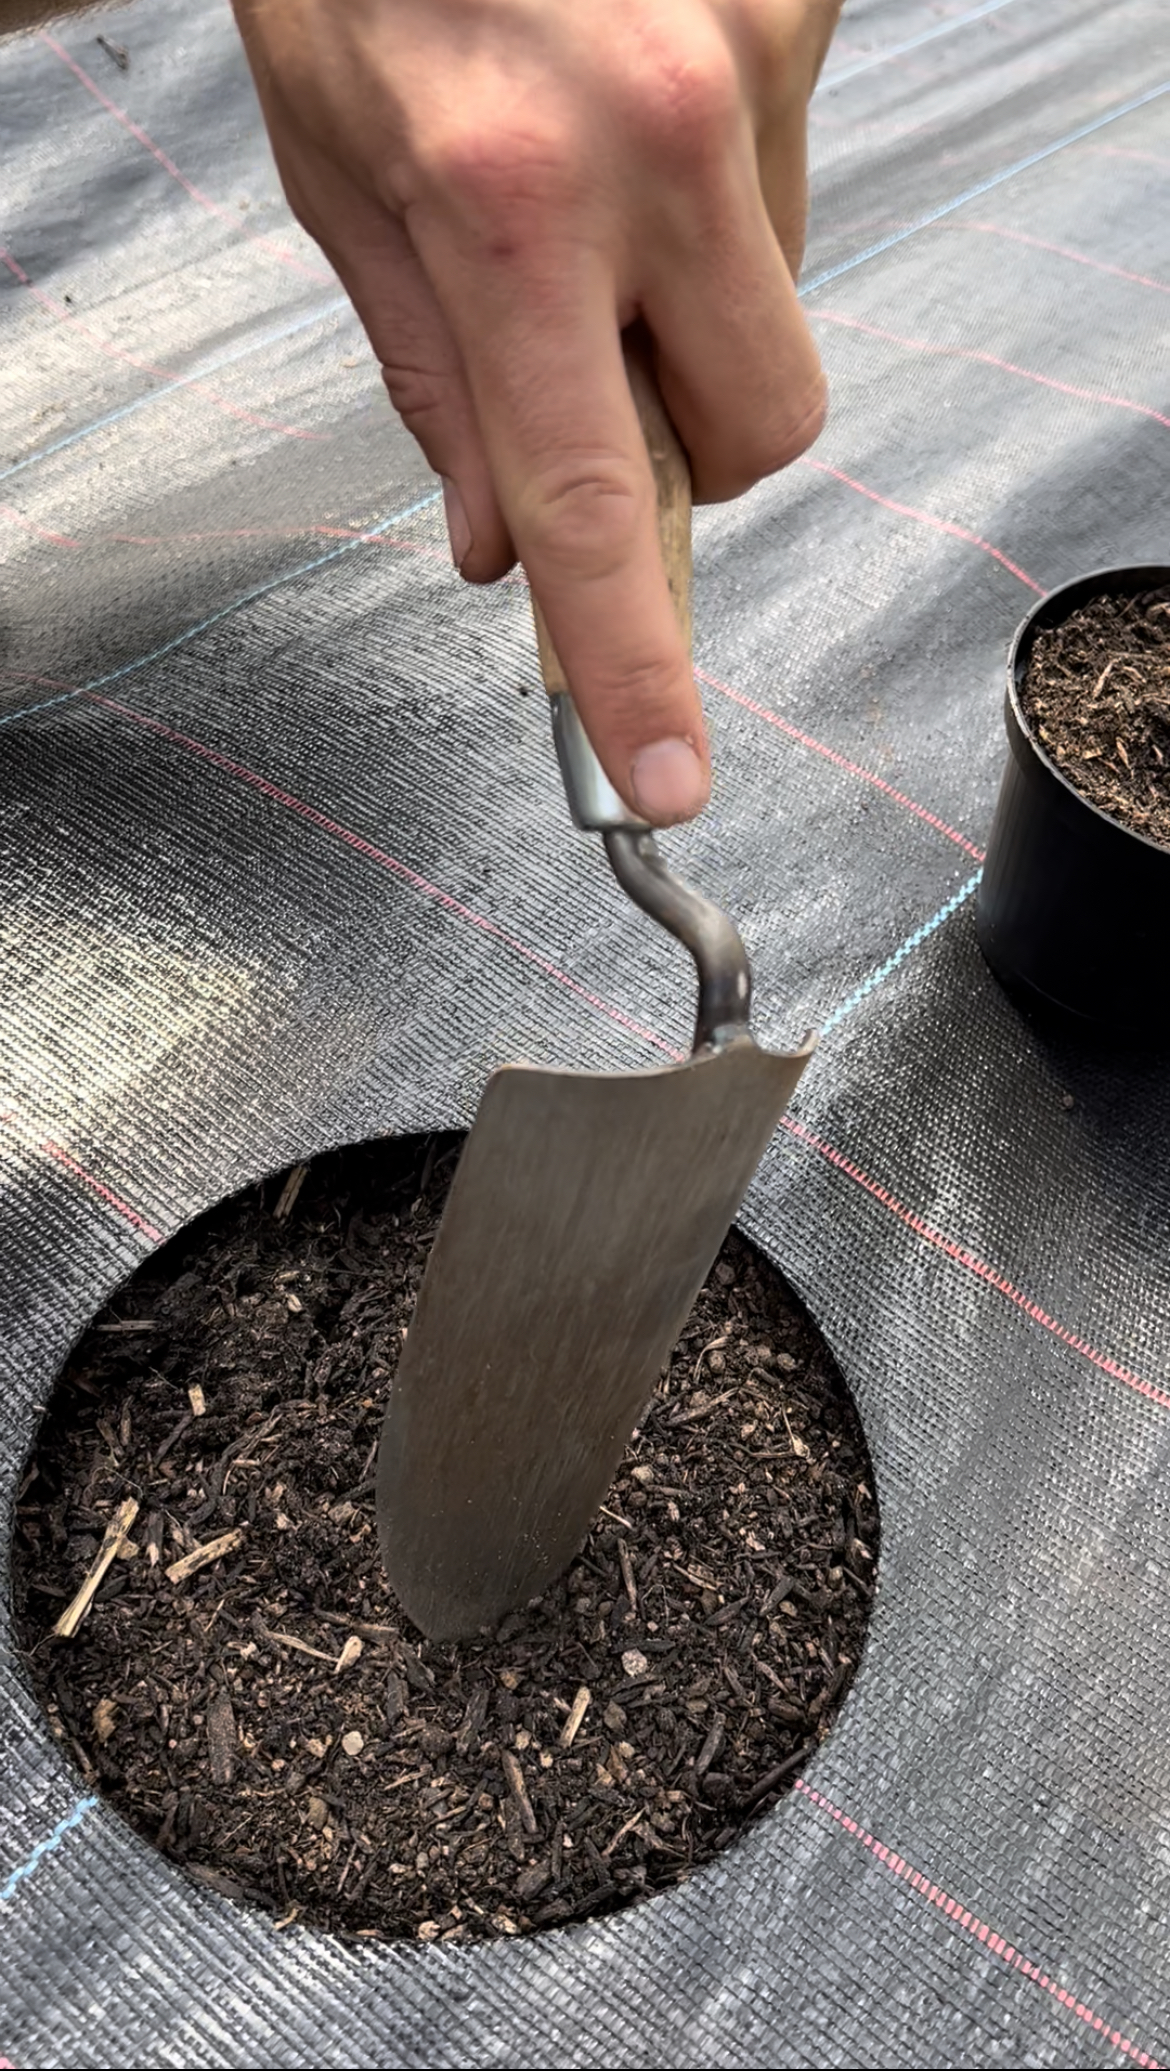 Hånd der graver hul med planteskovl